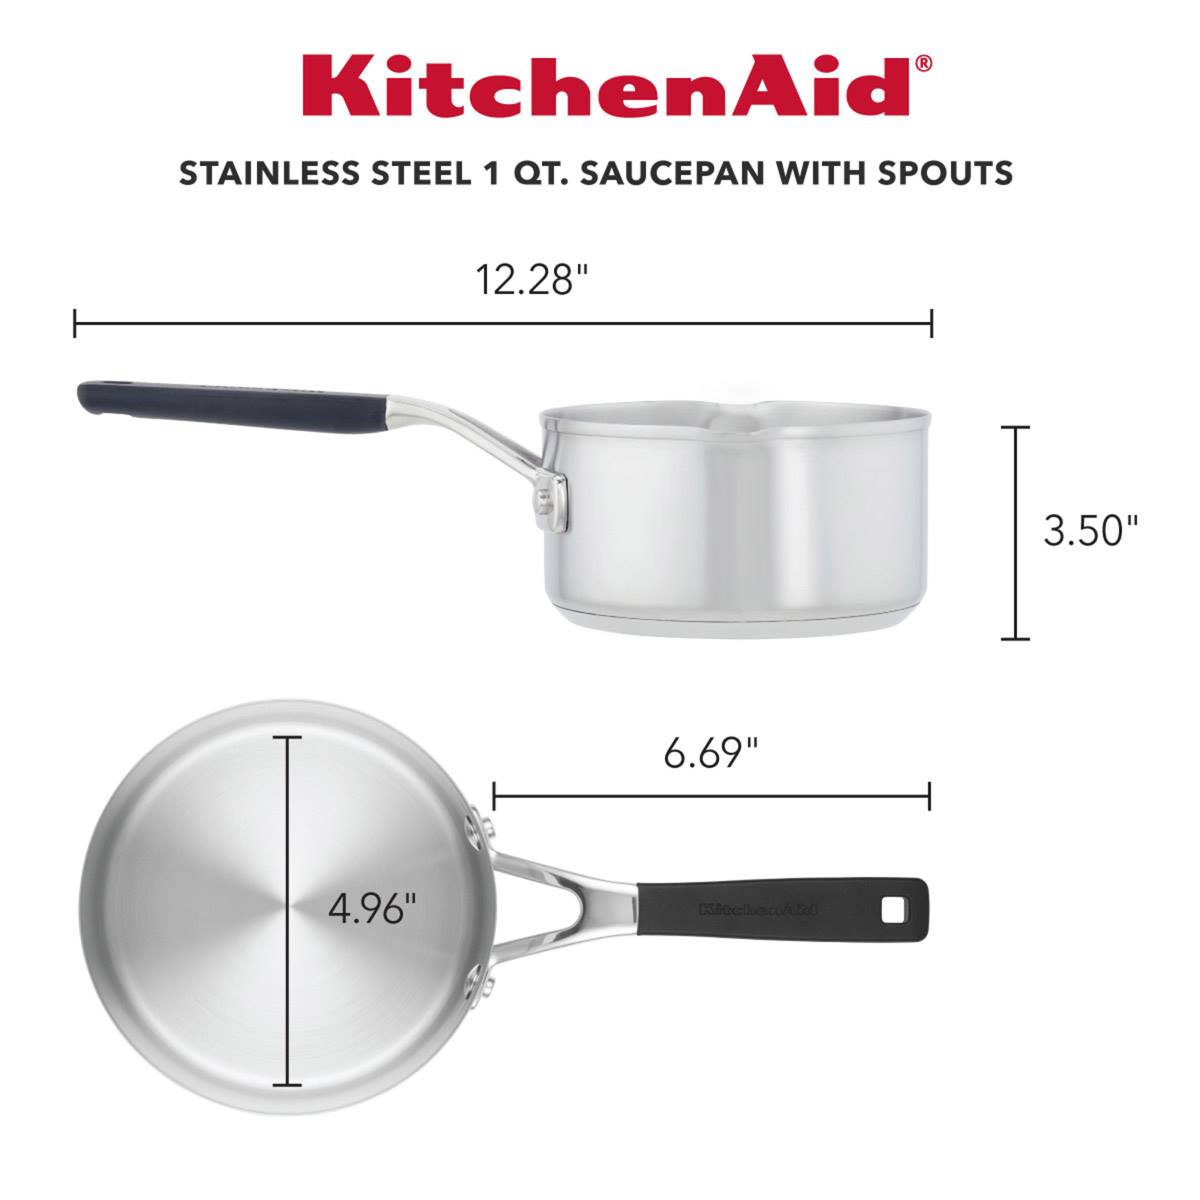 KitchenAid(R) 1qt. Stainless Steel Saucepan